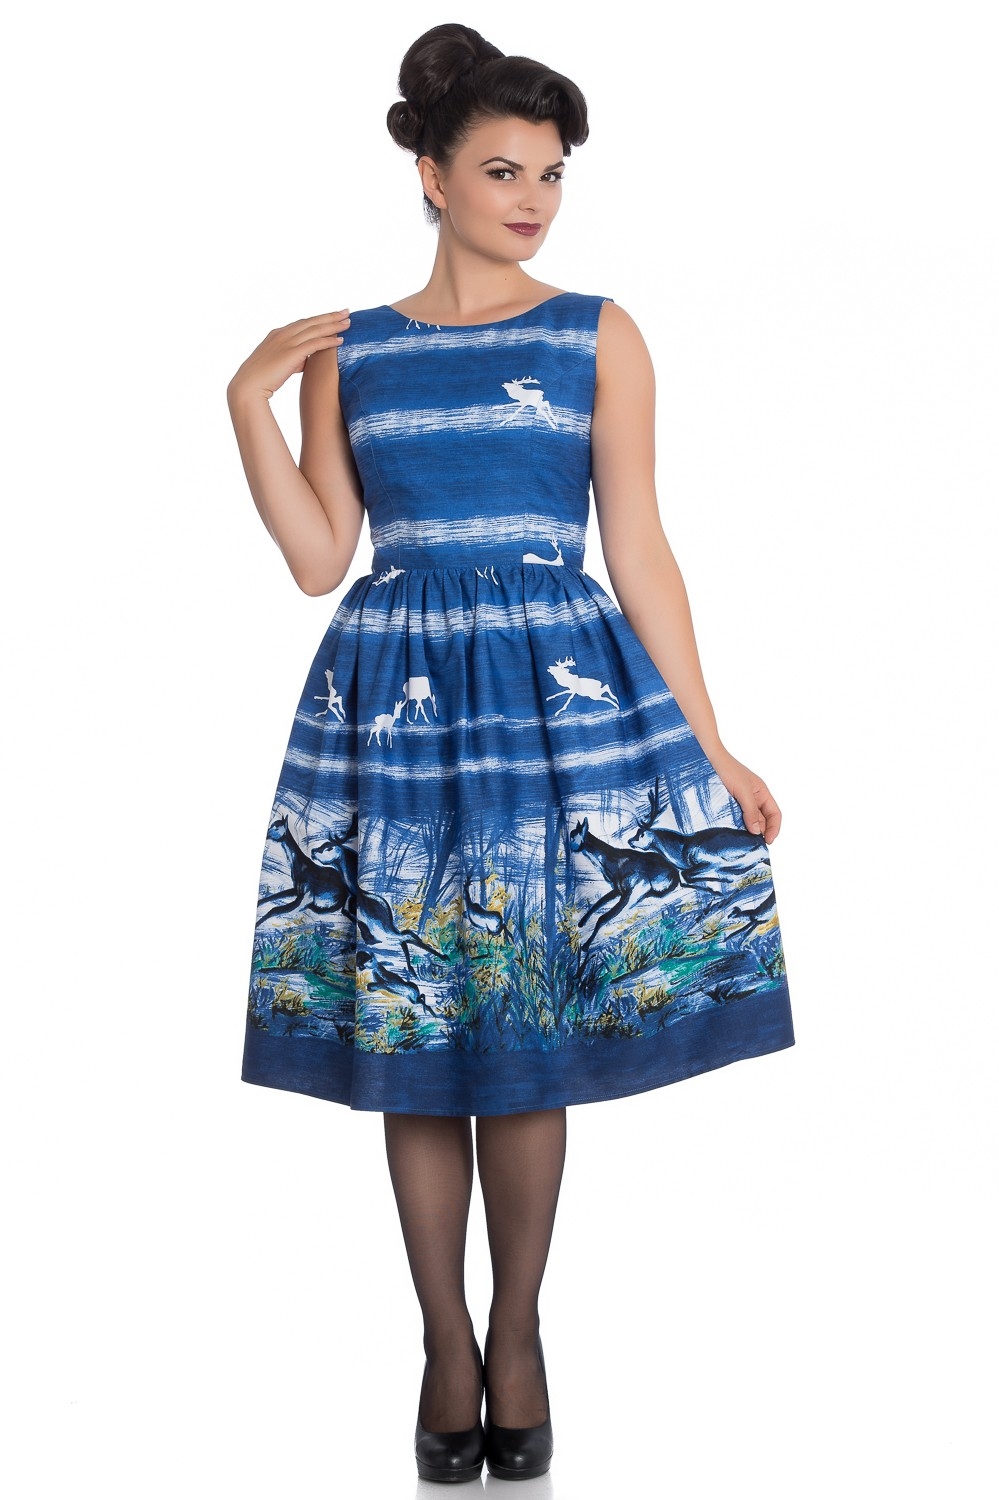 Montana kjole, blå - sød med efterårs/vintermotiv - Vi elsker alle årstider